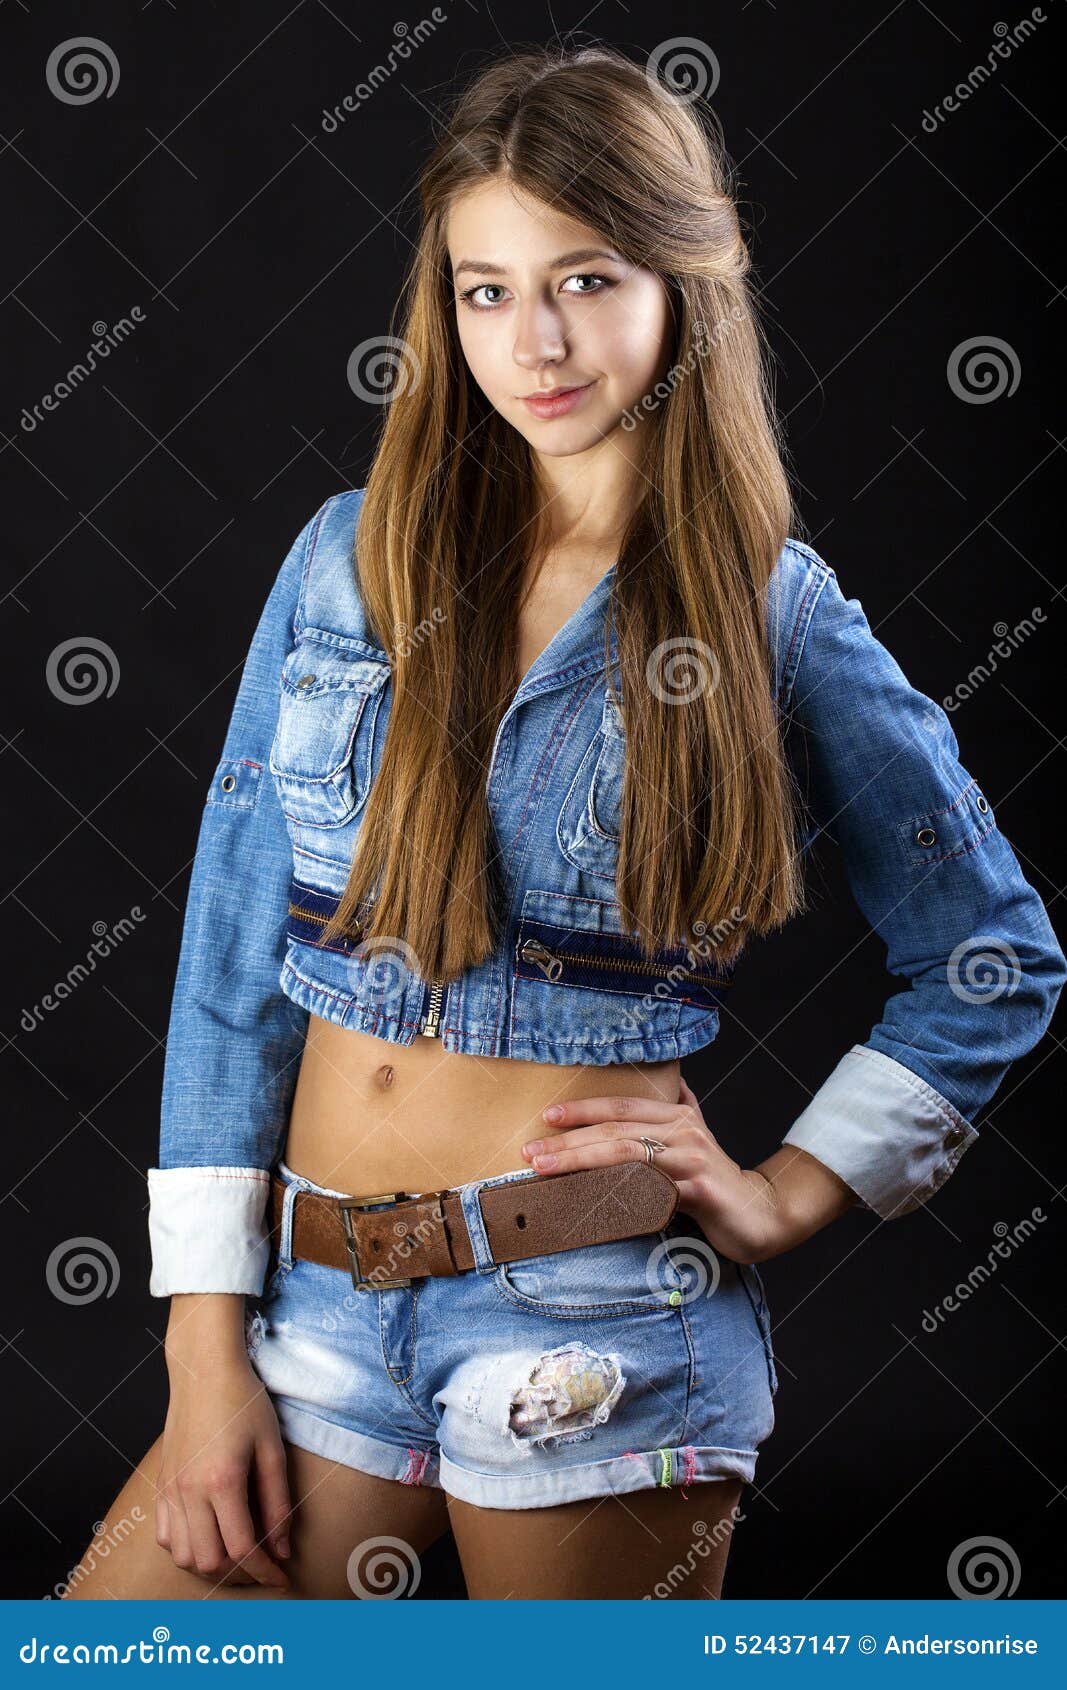 short jeans jacket for girl